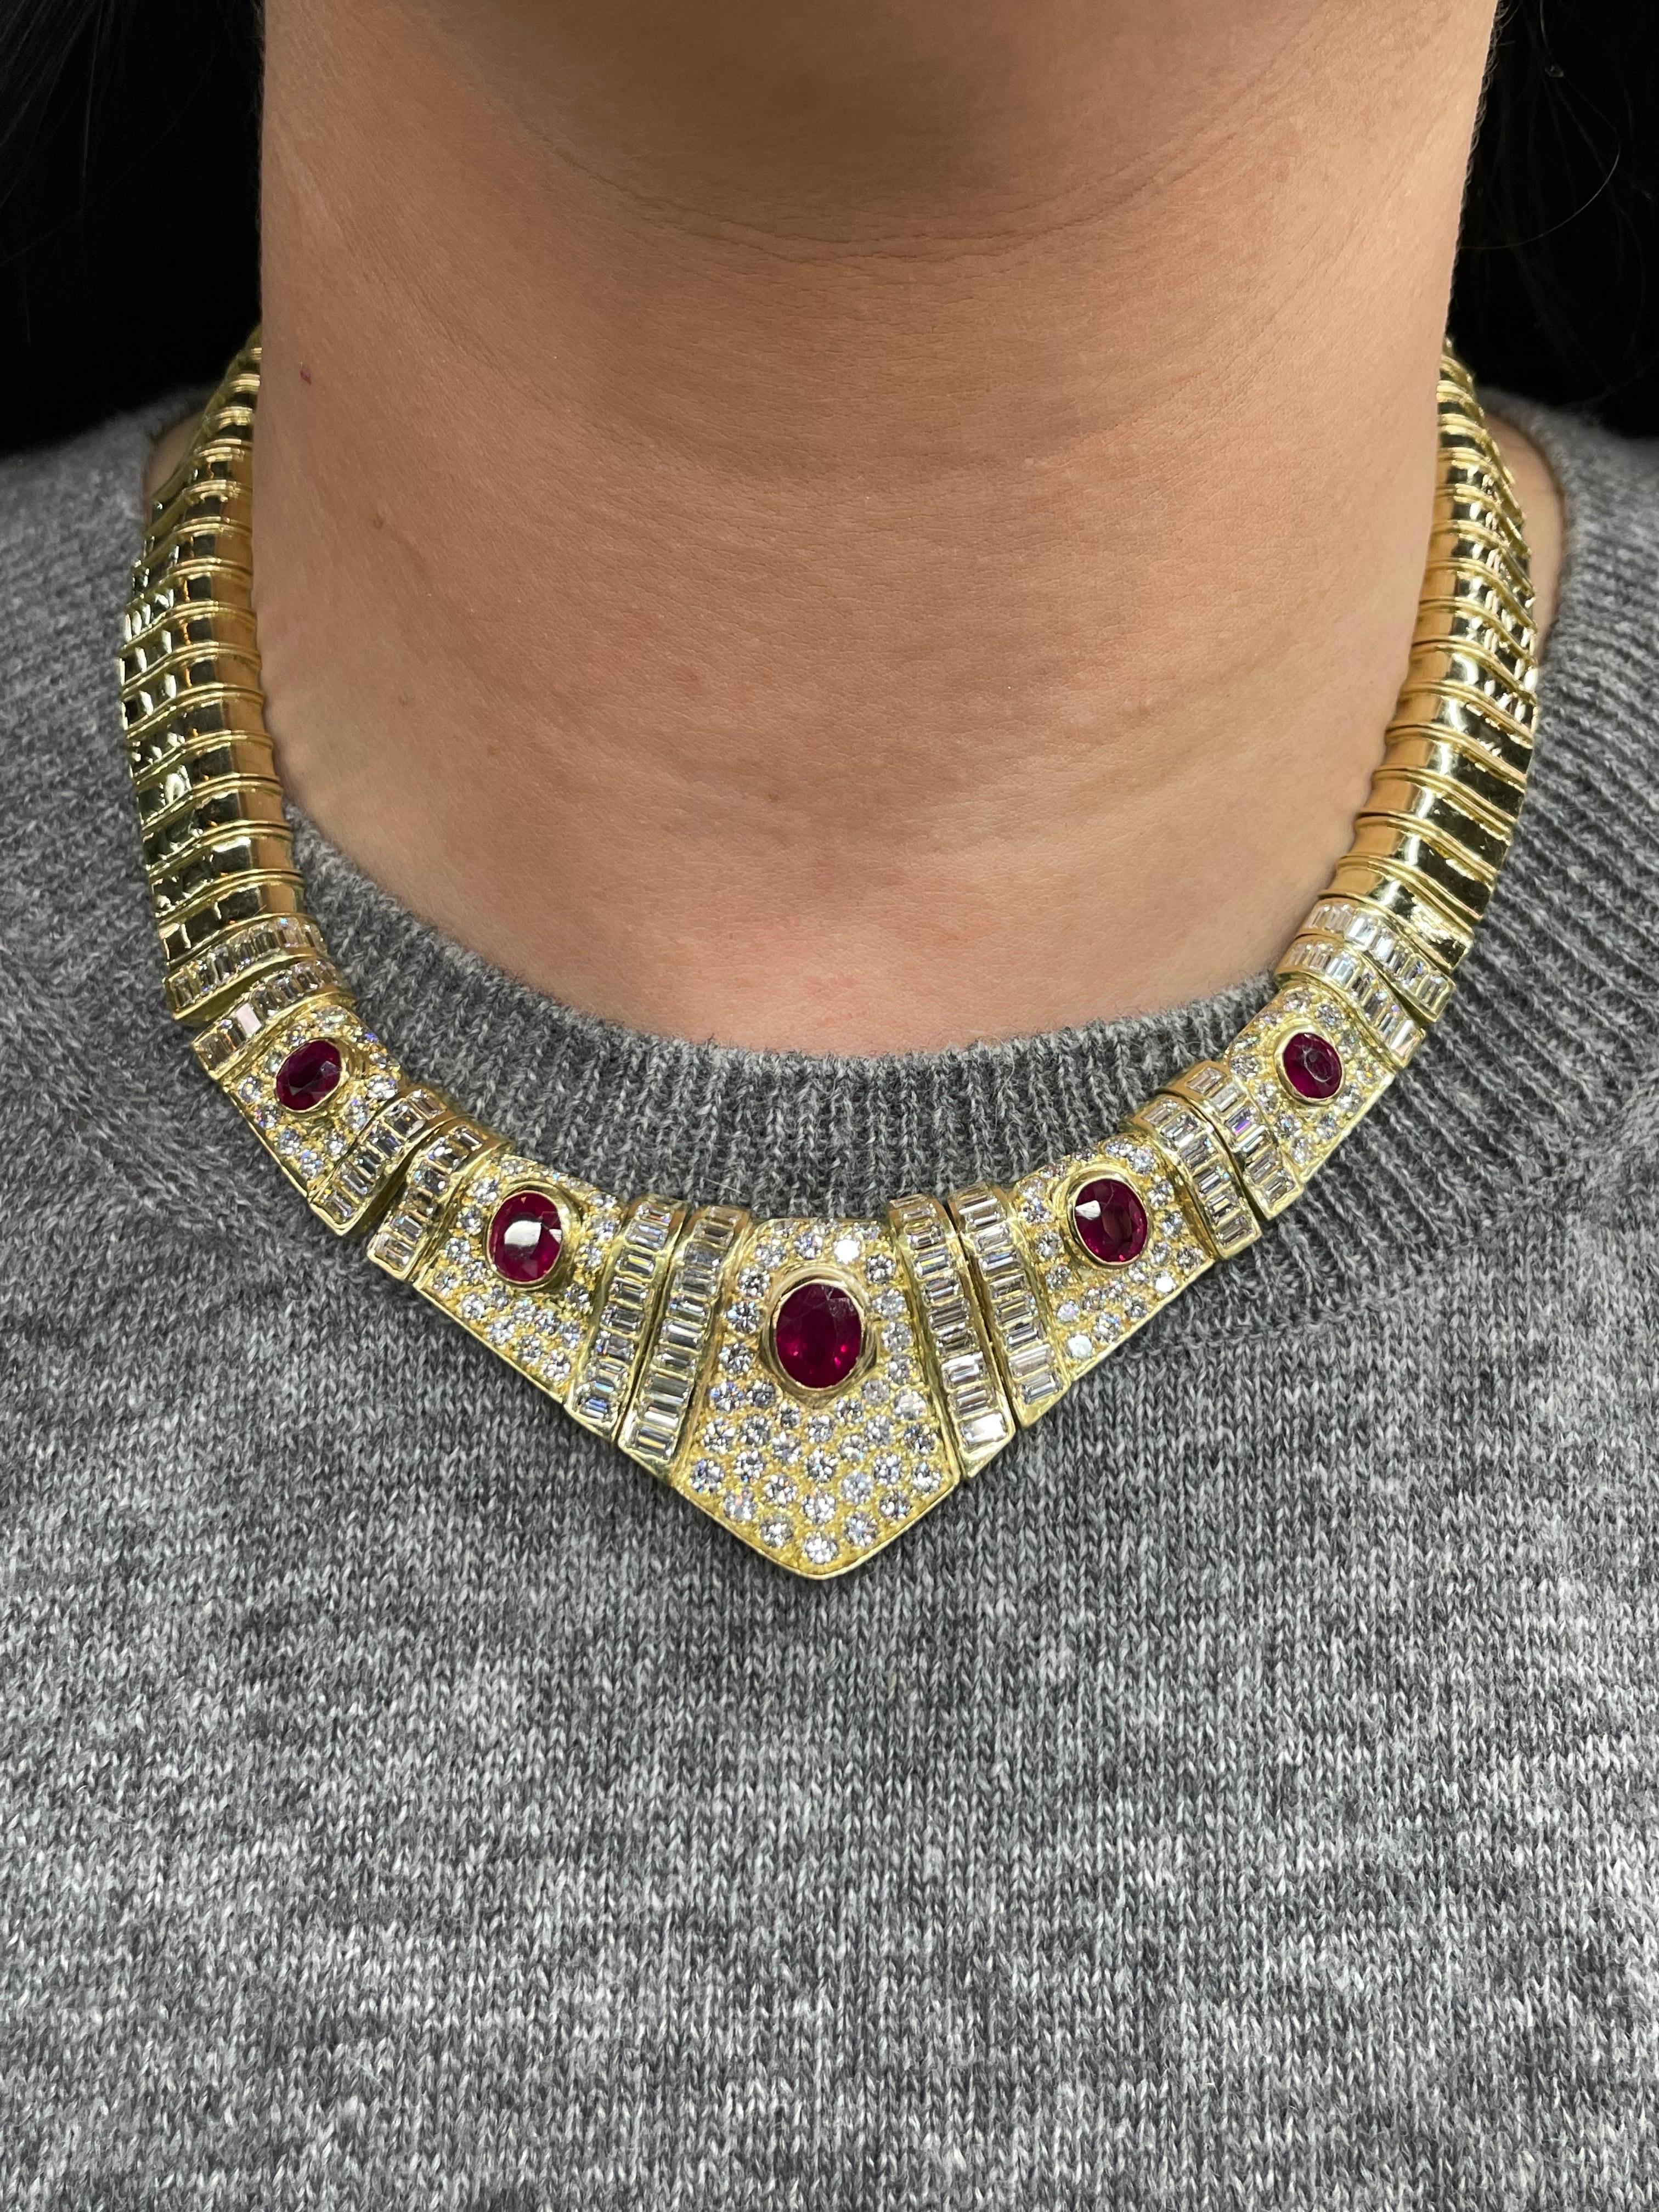 Certified Burma Ruby Diamond Collar Necklace 24.50 Carats 18 Karat Yellow Gold For Sale 9